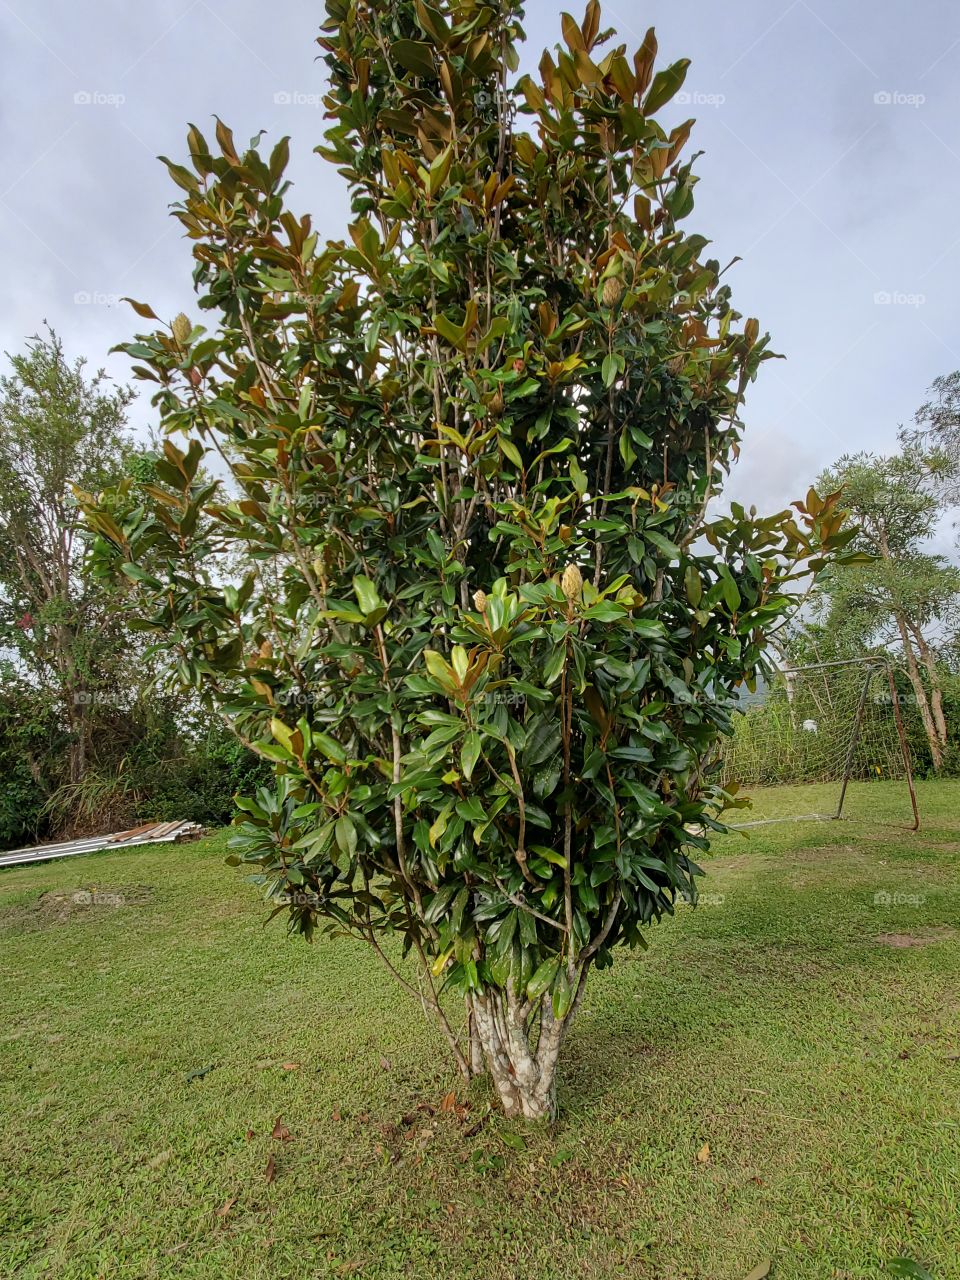 beautiful magnolia tree